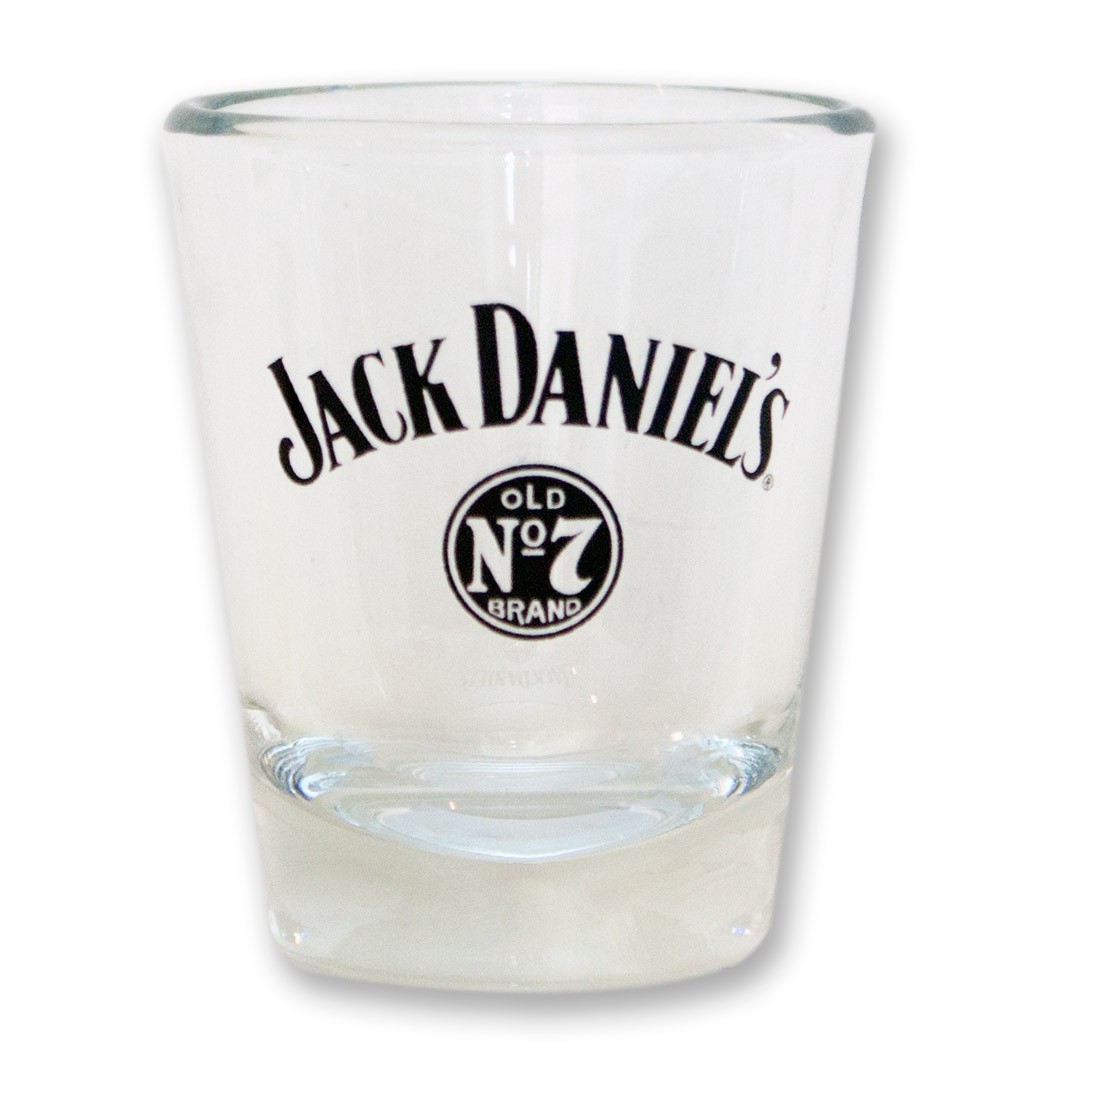 JACK DANIEL'S WHISKEY OLD NO 7 BRAND CIRCLE LOGO SQUARE BOTTOM SHOT GLASS NEW 